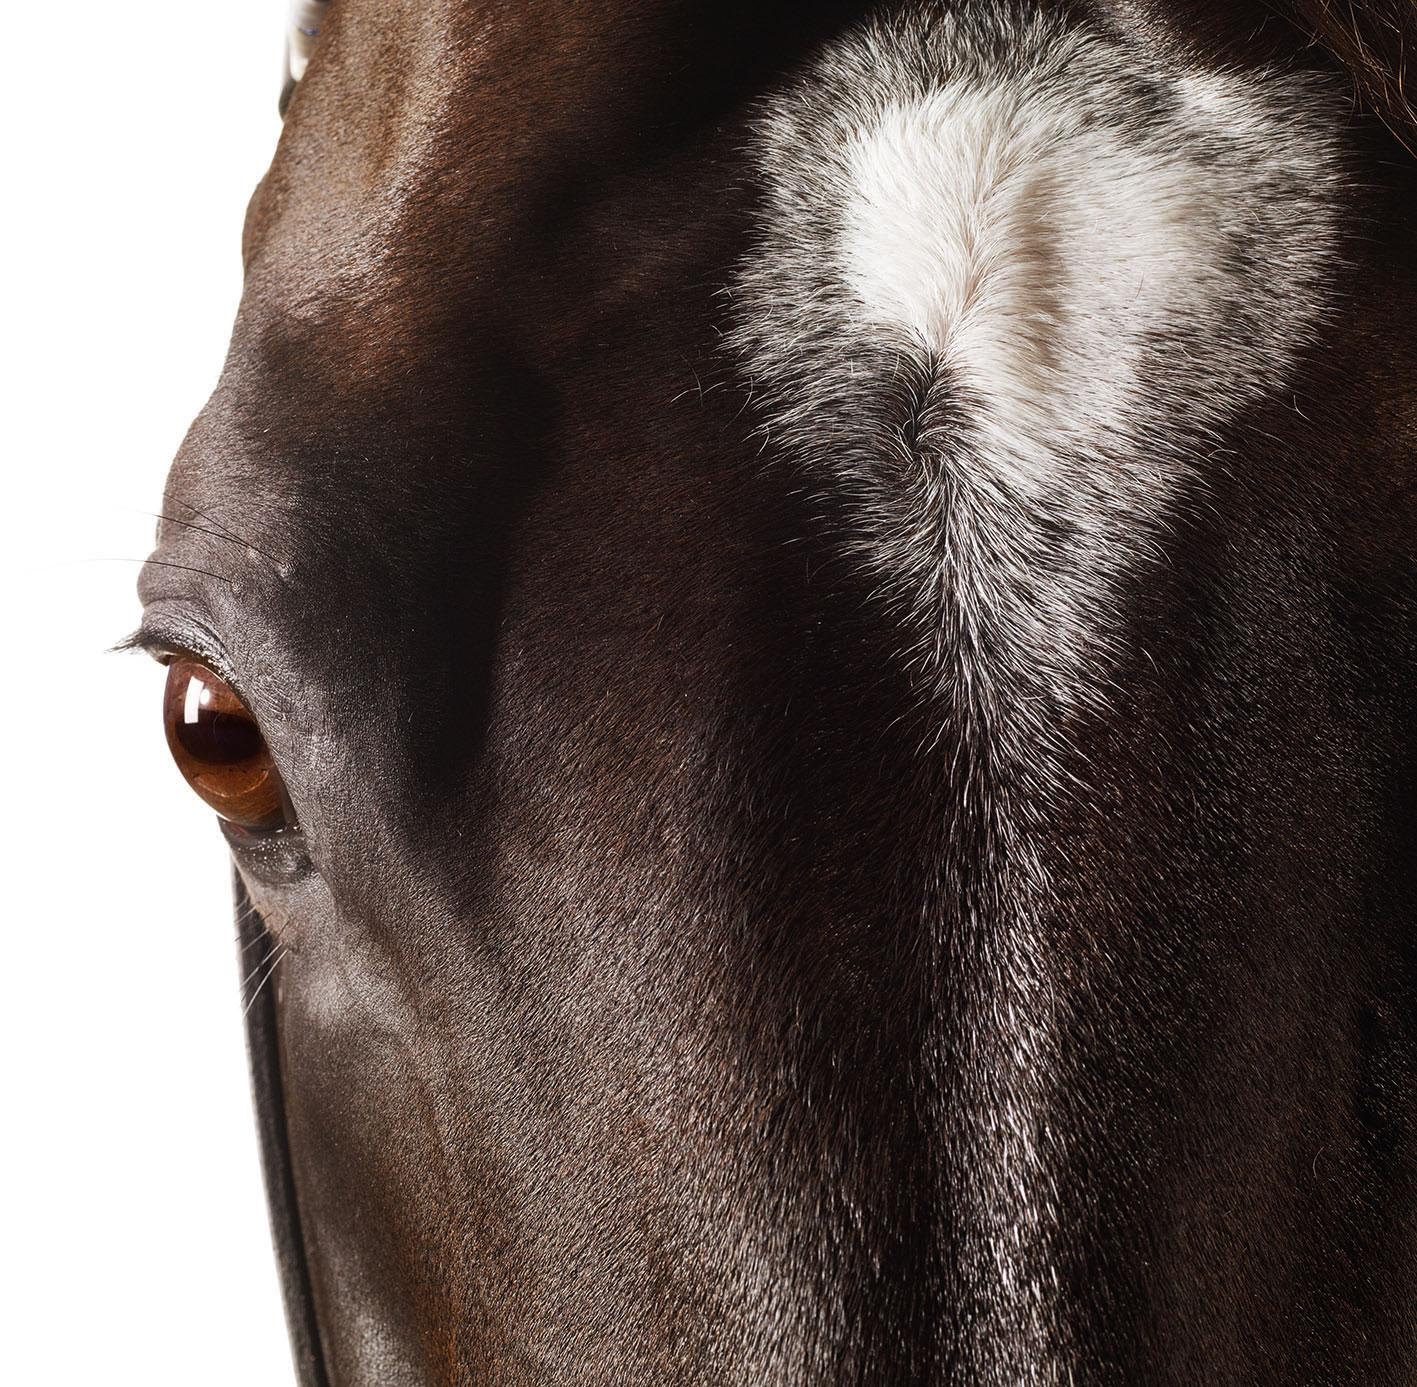 Medaglia d’Oro, Horse head and eye - Stallion Portrait unframed Print on Paper